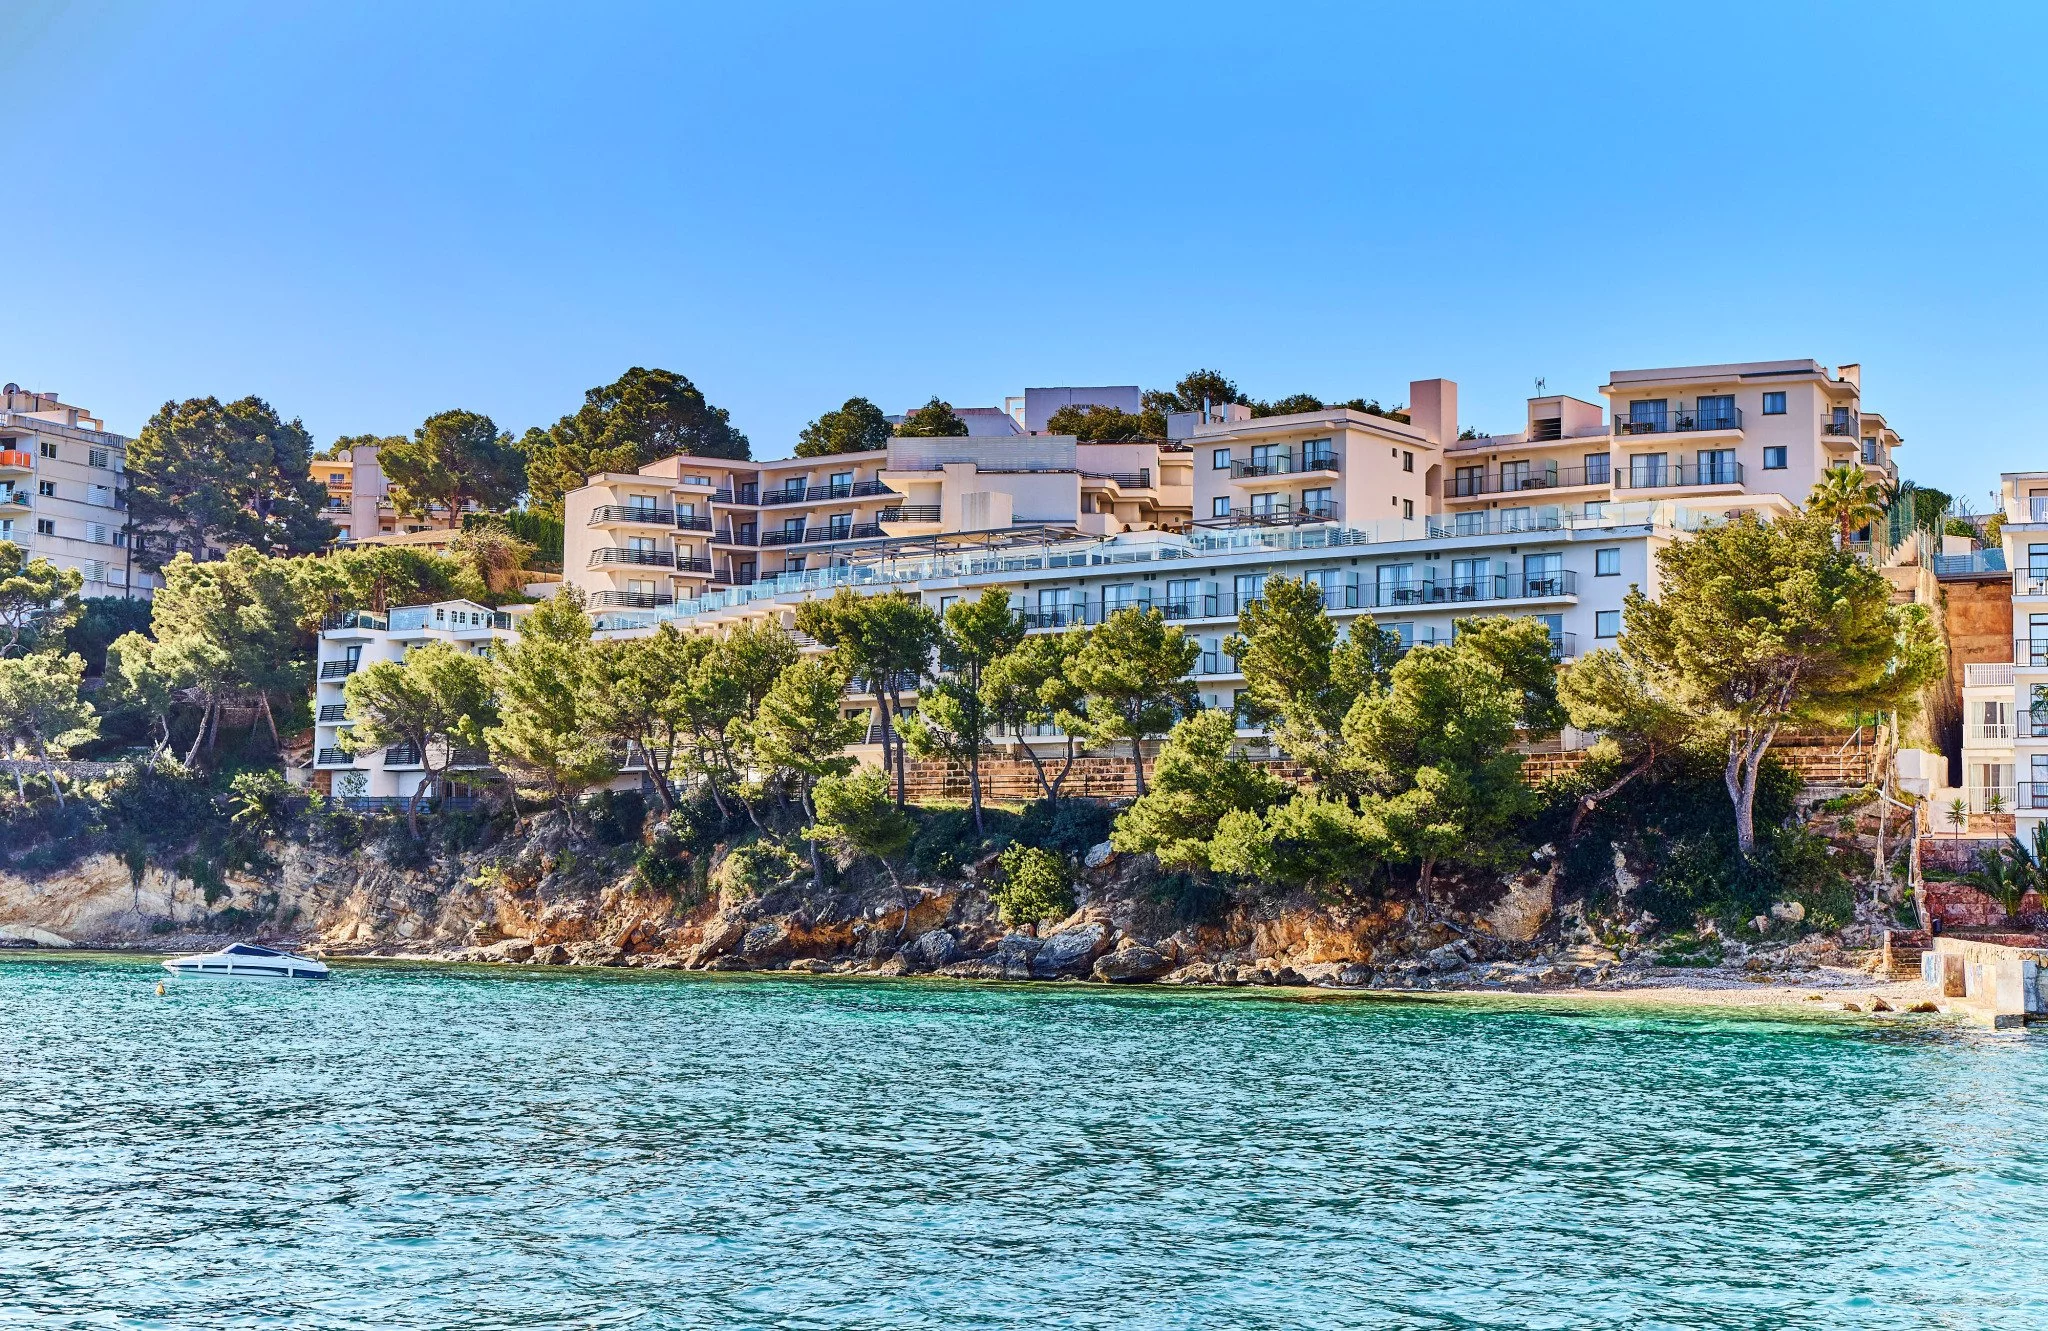 Leonardo Royal Hotel Mallorca Palmanova Bay - Vista Exterior/Hotel